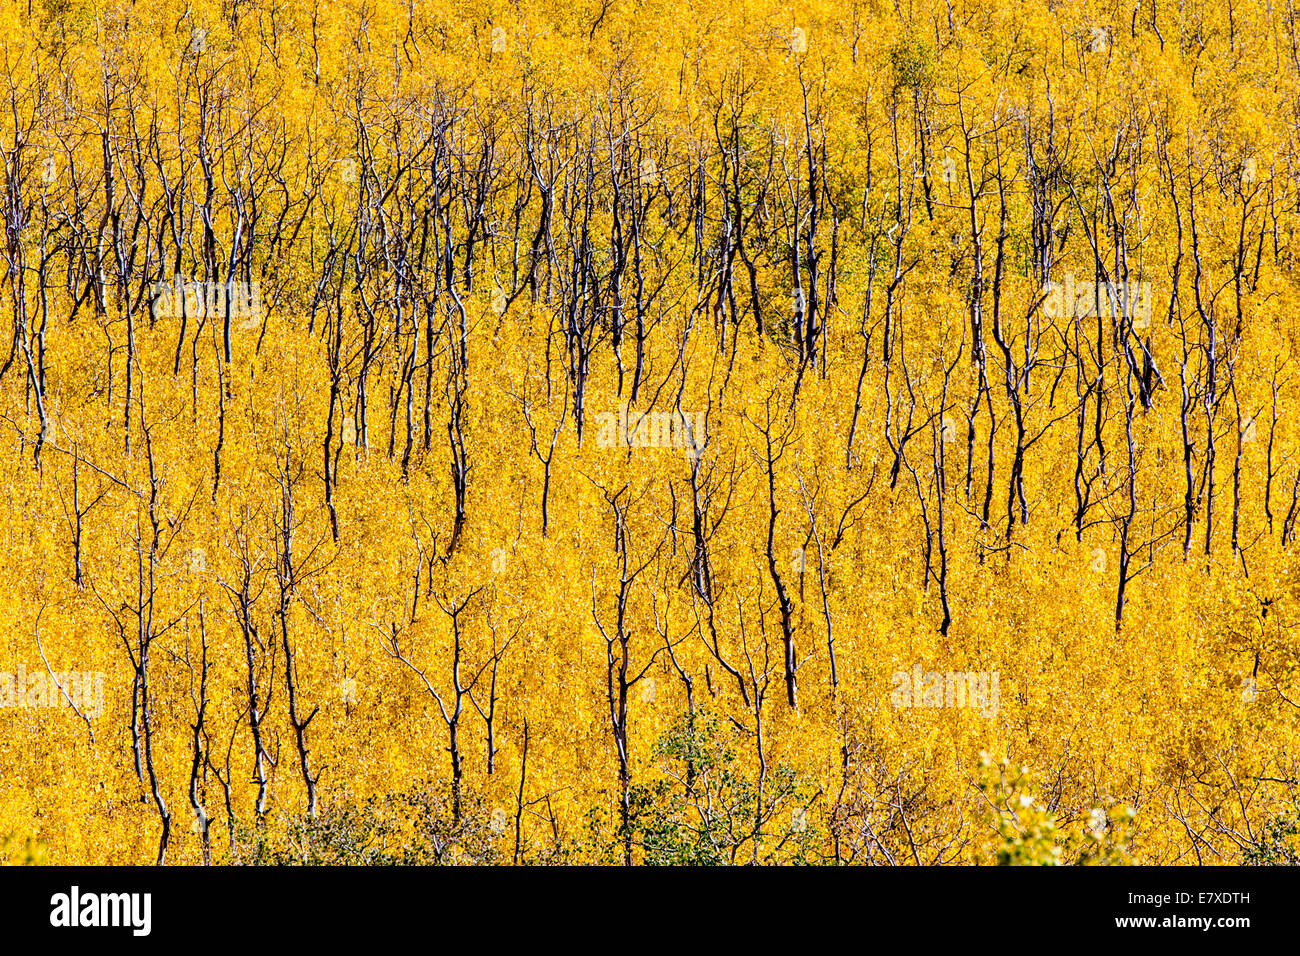 Fall foliage with autumn colors, Aspen Ridge, Central Colorado, USA Stock Photo